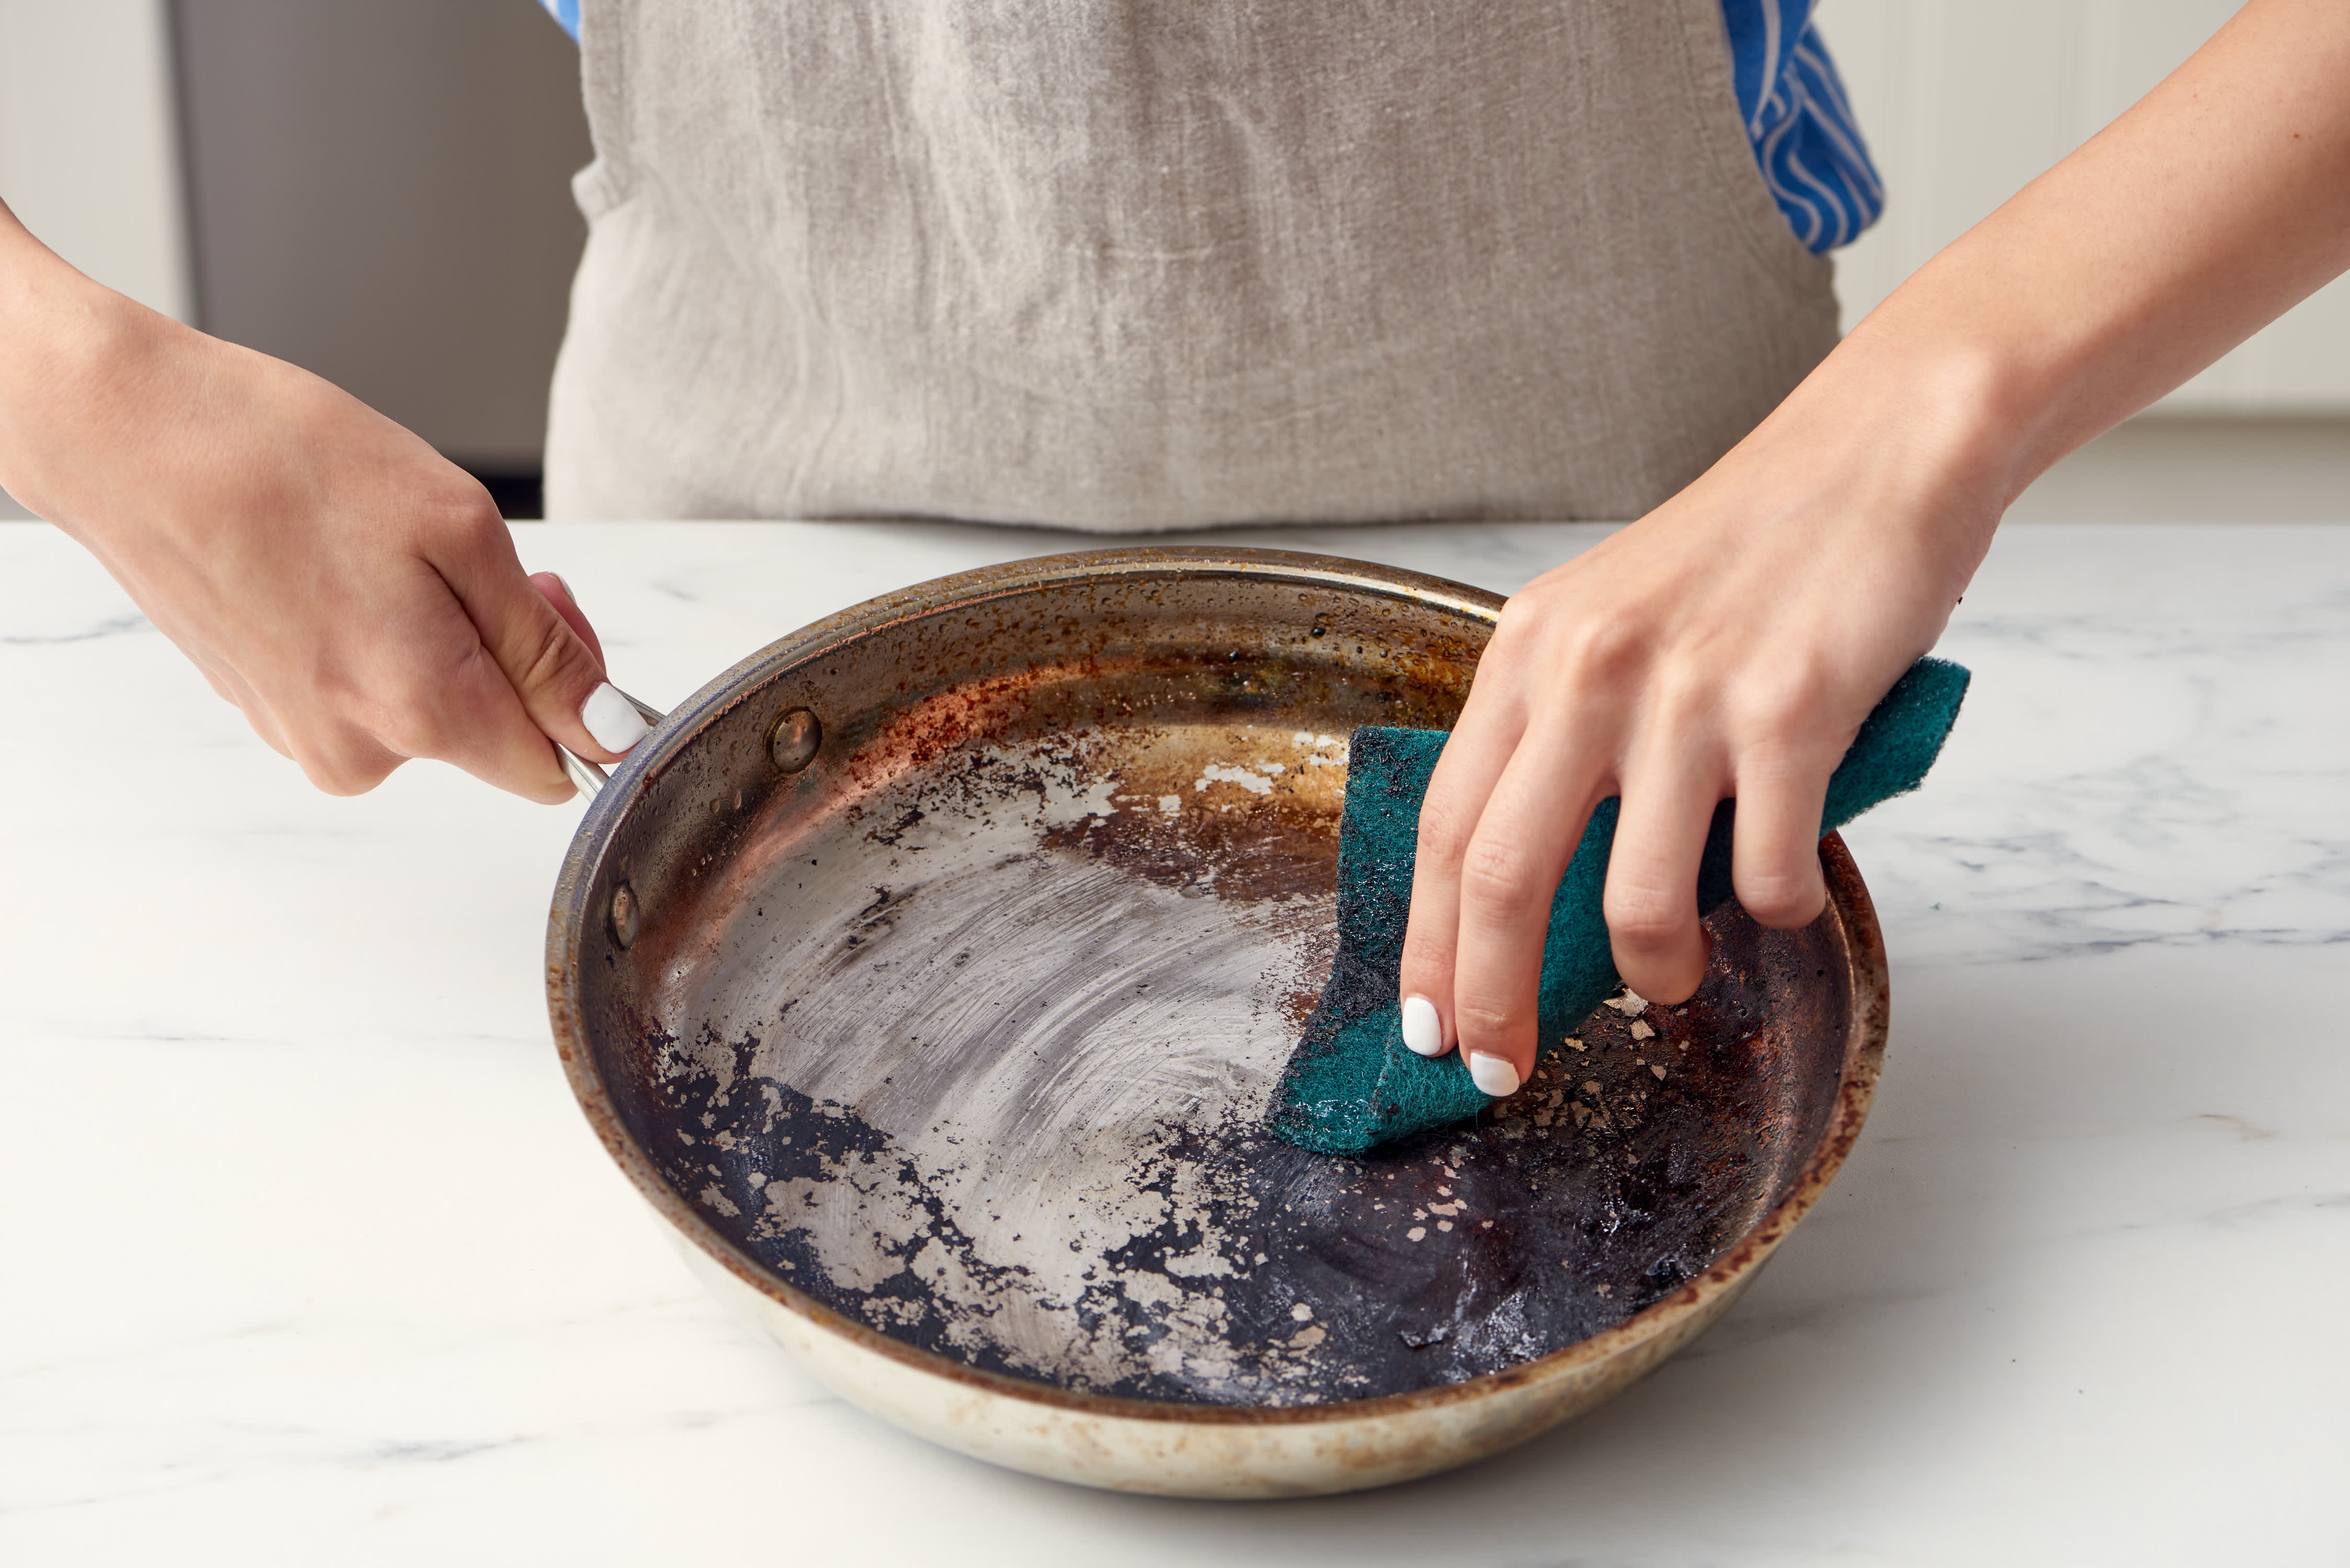 How to pan. Очистить сковороду от нагара. Нагар на сковороде. Как очистить сковороду от нагара в домашних условиях. Очистить сковороду содой.